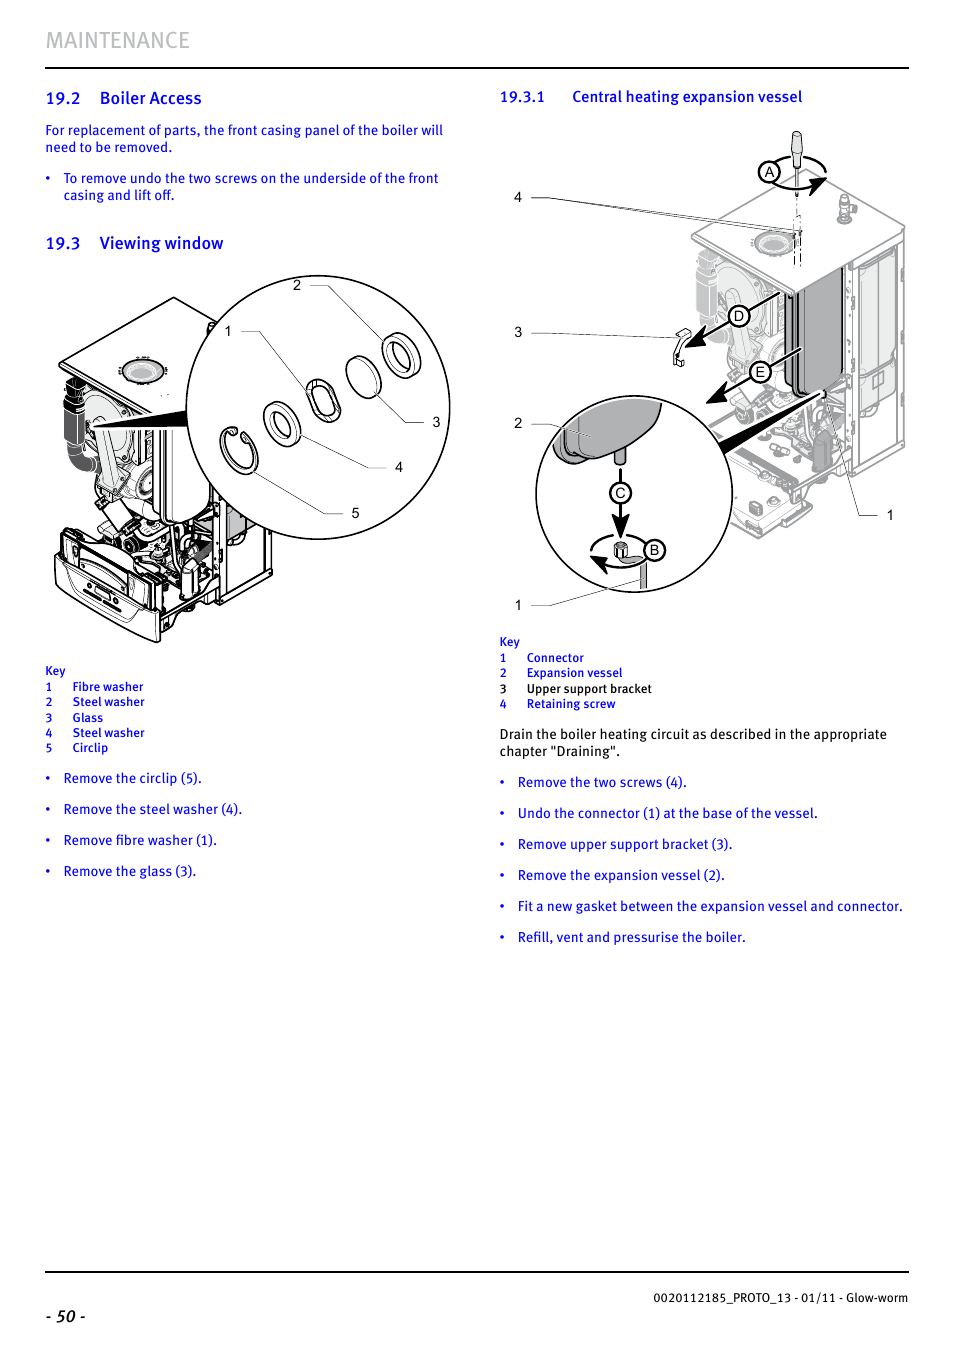 Maintenance, 3 viewing window | Glow-worm Ultracom2 35 Store User Manual | Page 52 / 68